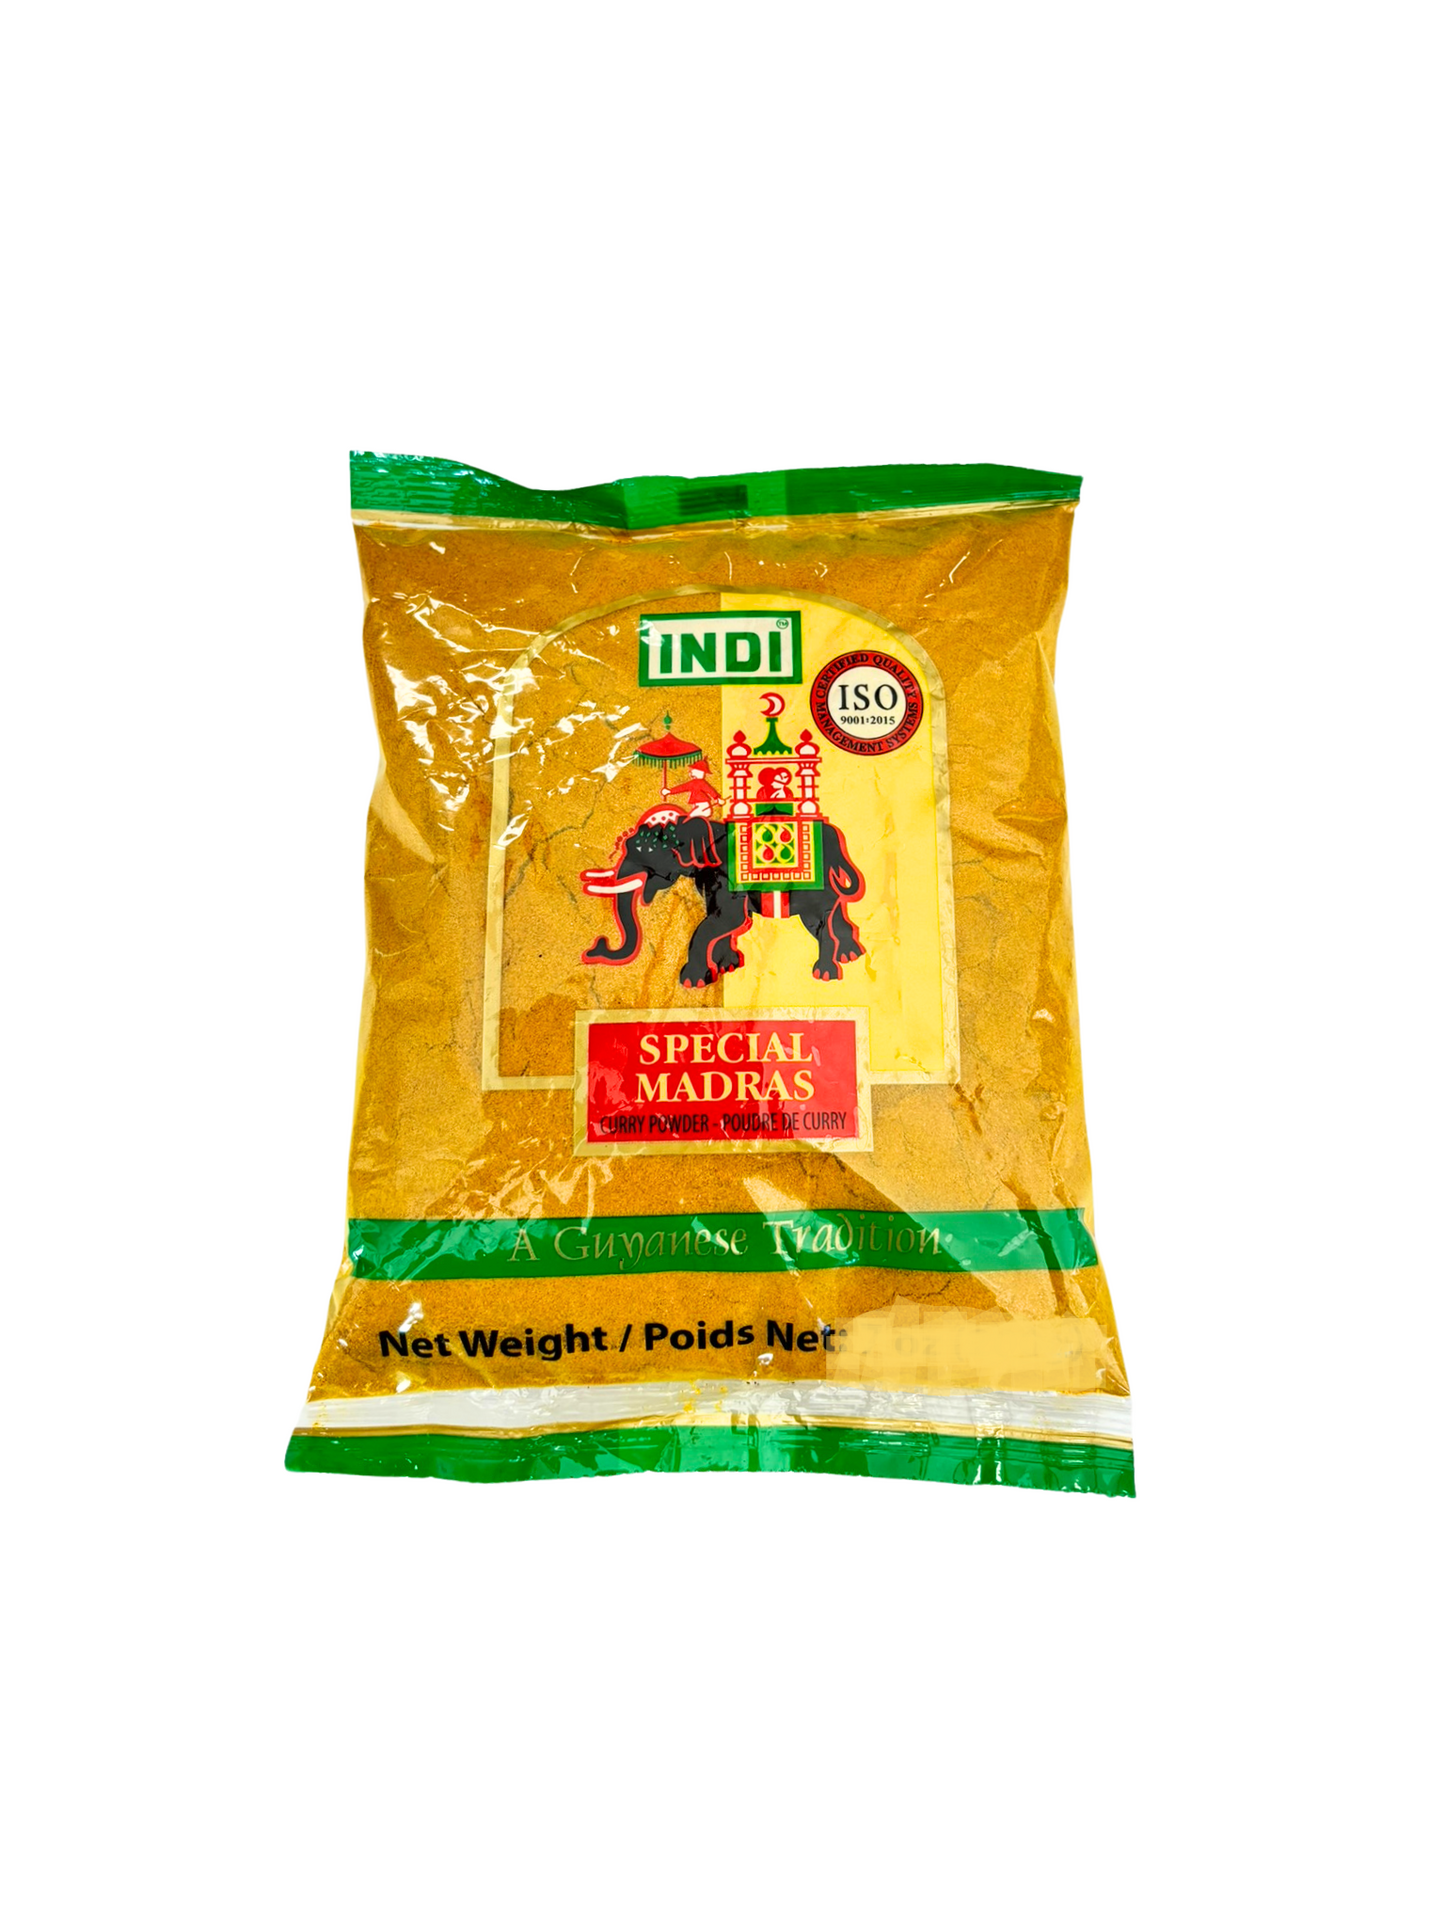 Indi Special Madras Curry Powder 400g